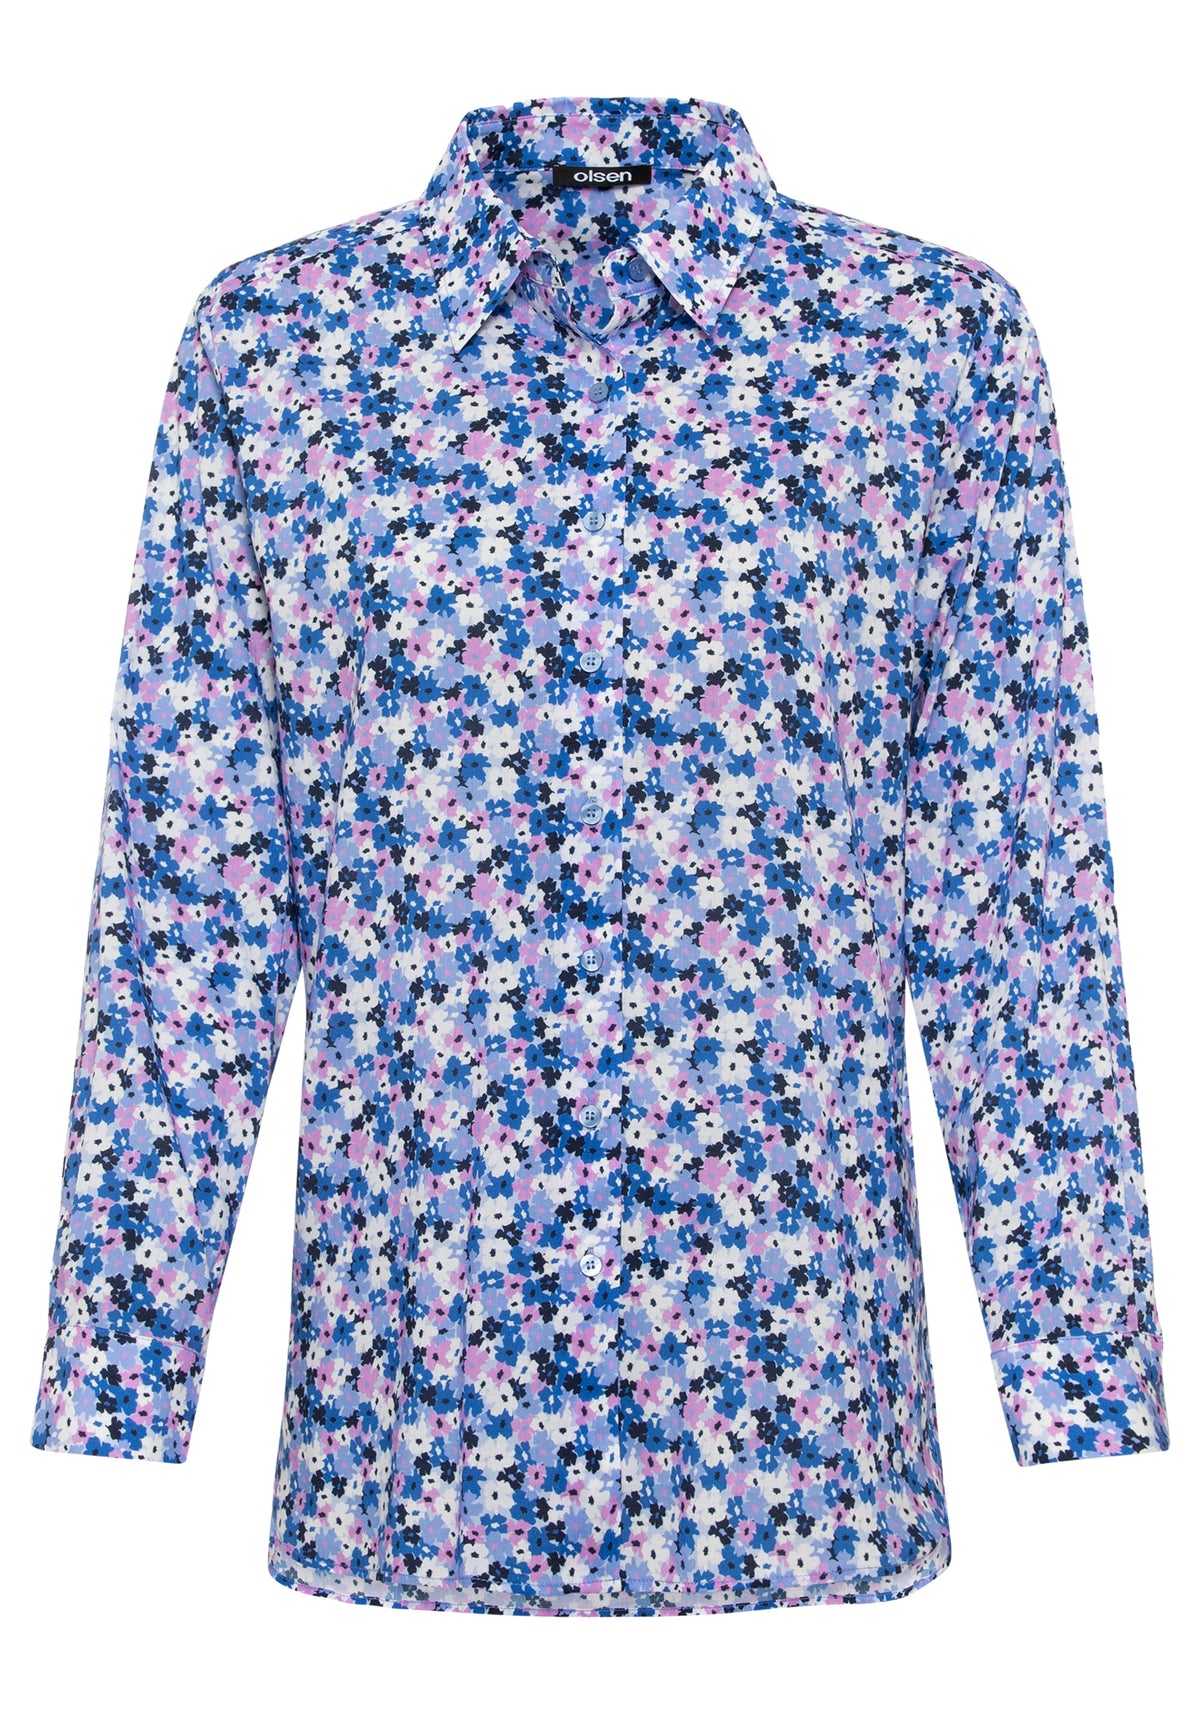 Cotton Blend Long Sleeve Allover Floral Print Shirt